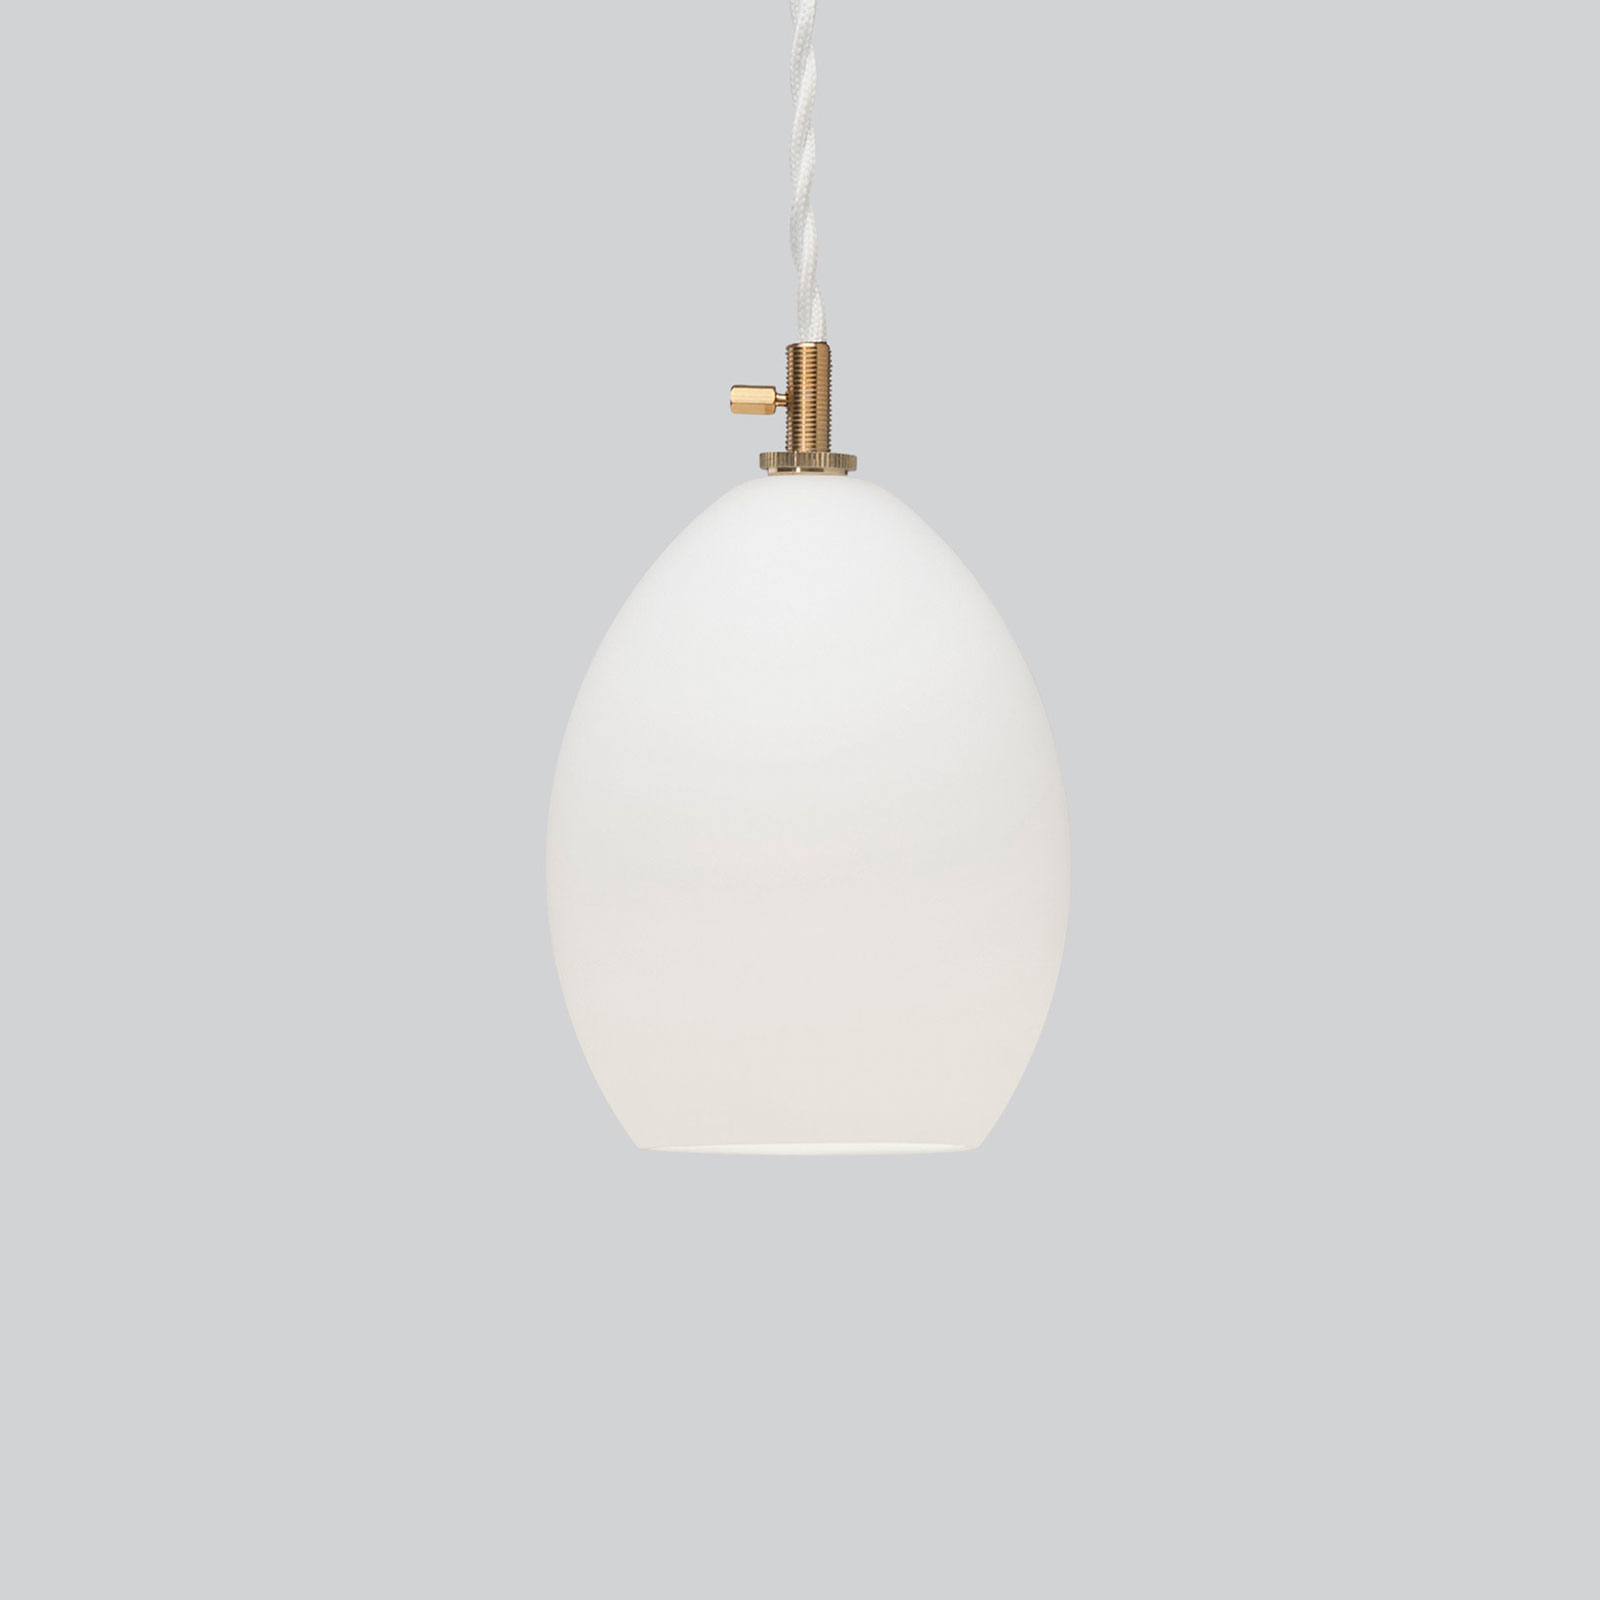 Northern Unika lámpara de vidrio blanco, small